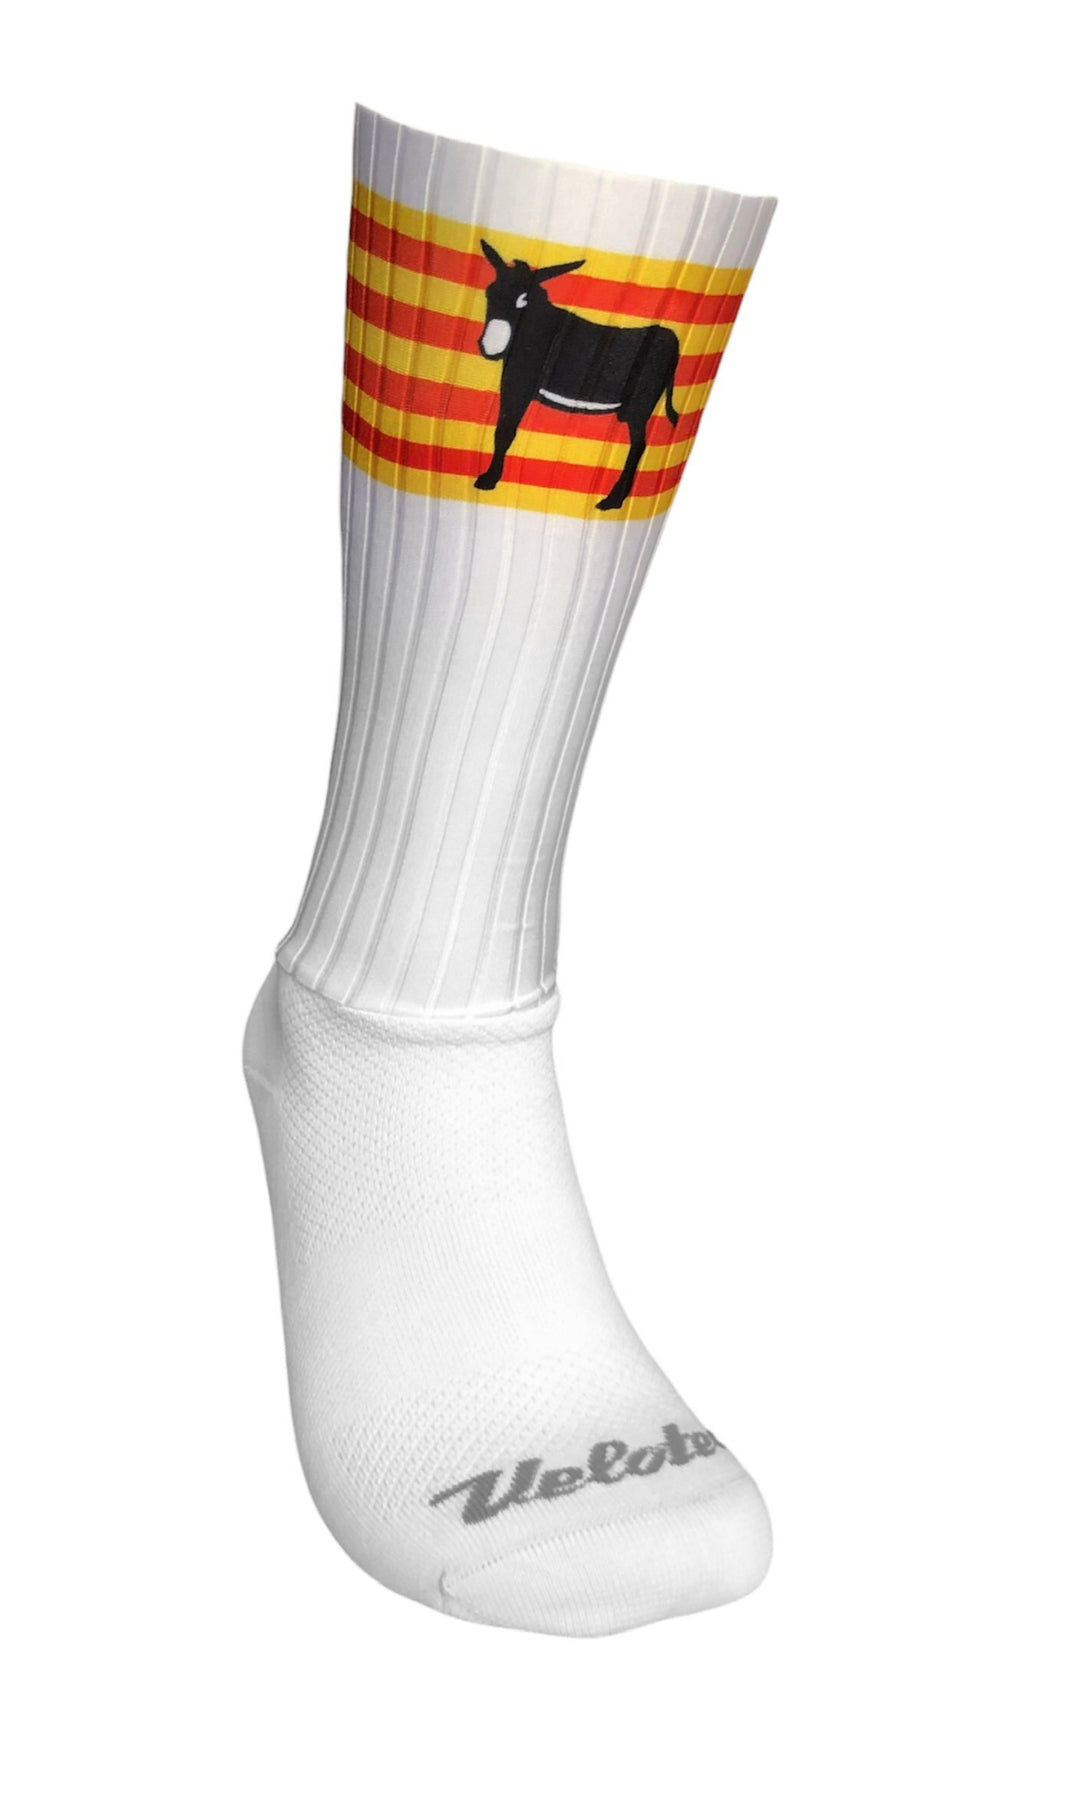 Aero-socks 2.0 Cataluña